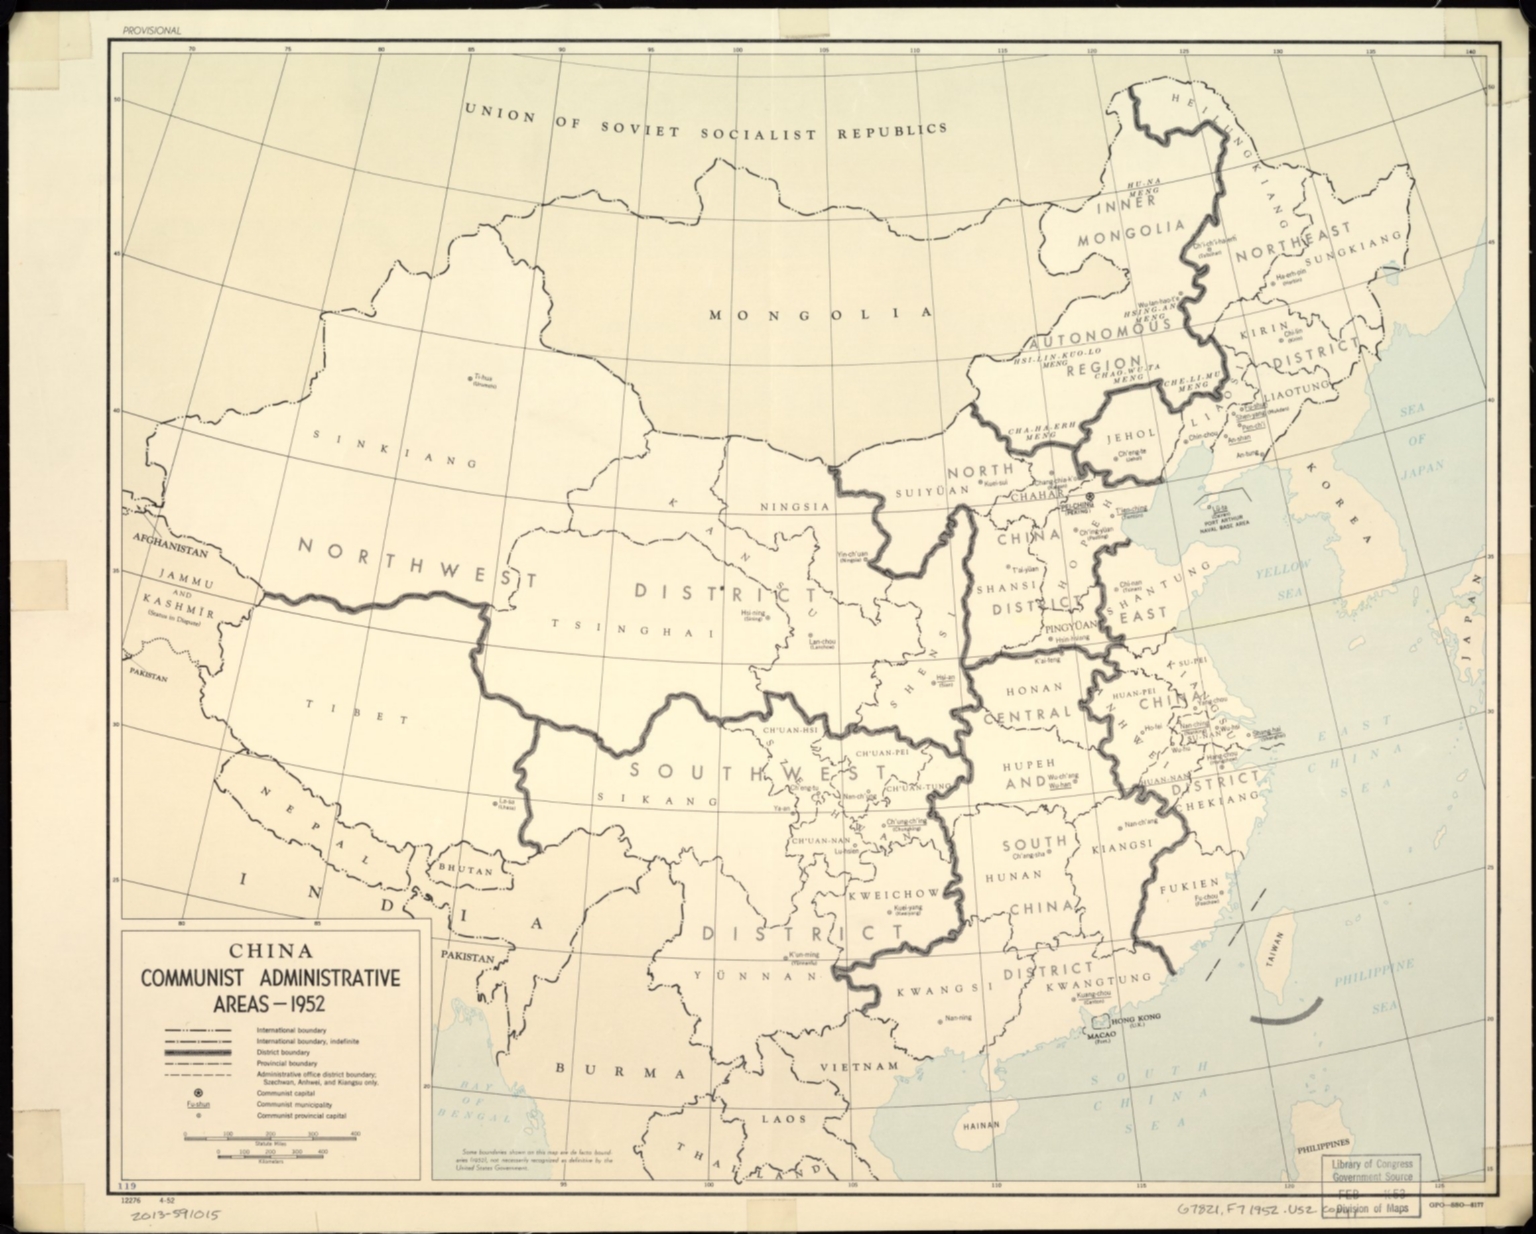 China, communist administrative areas 1952